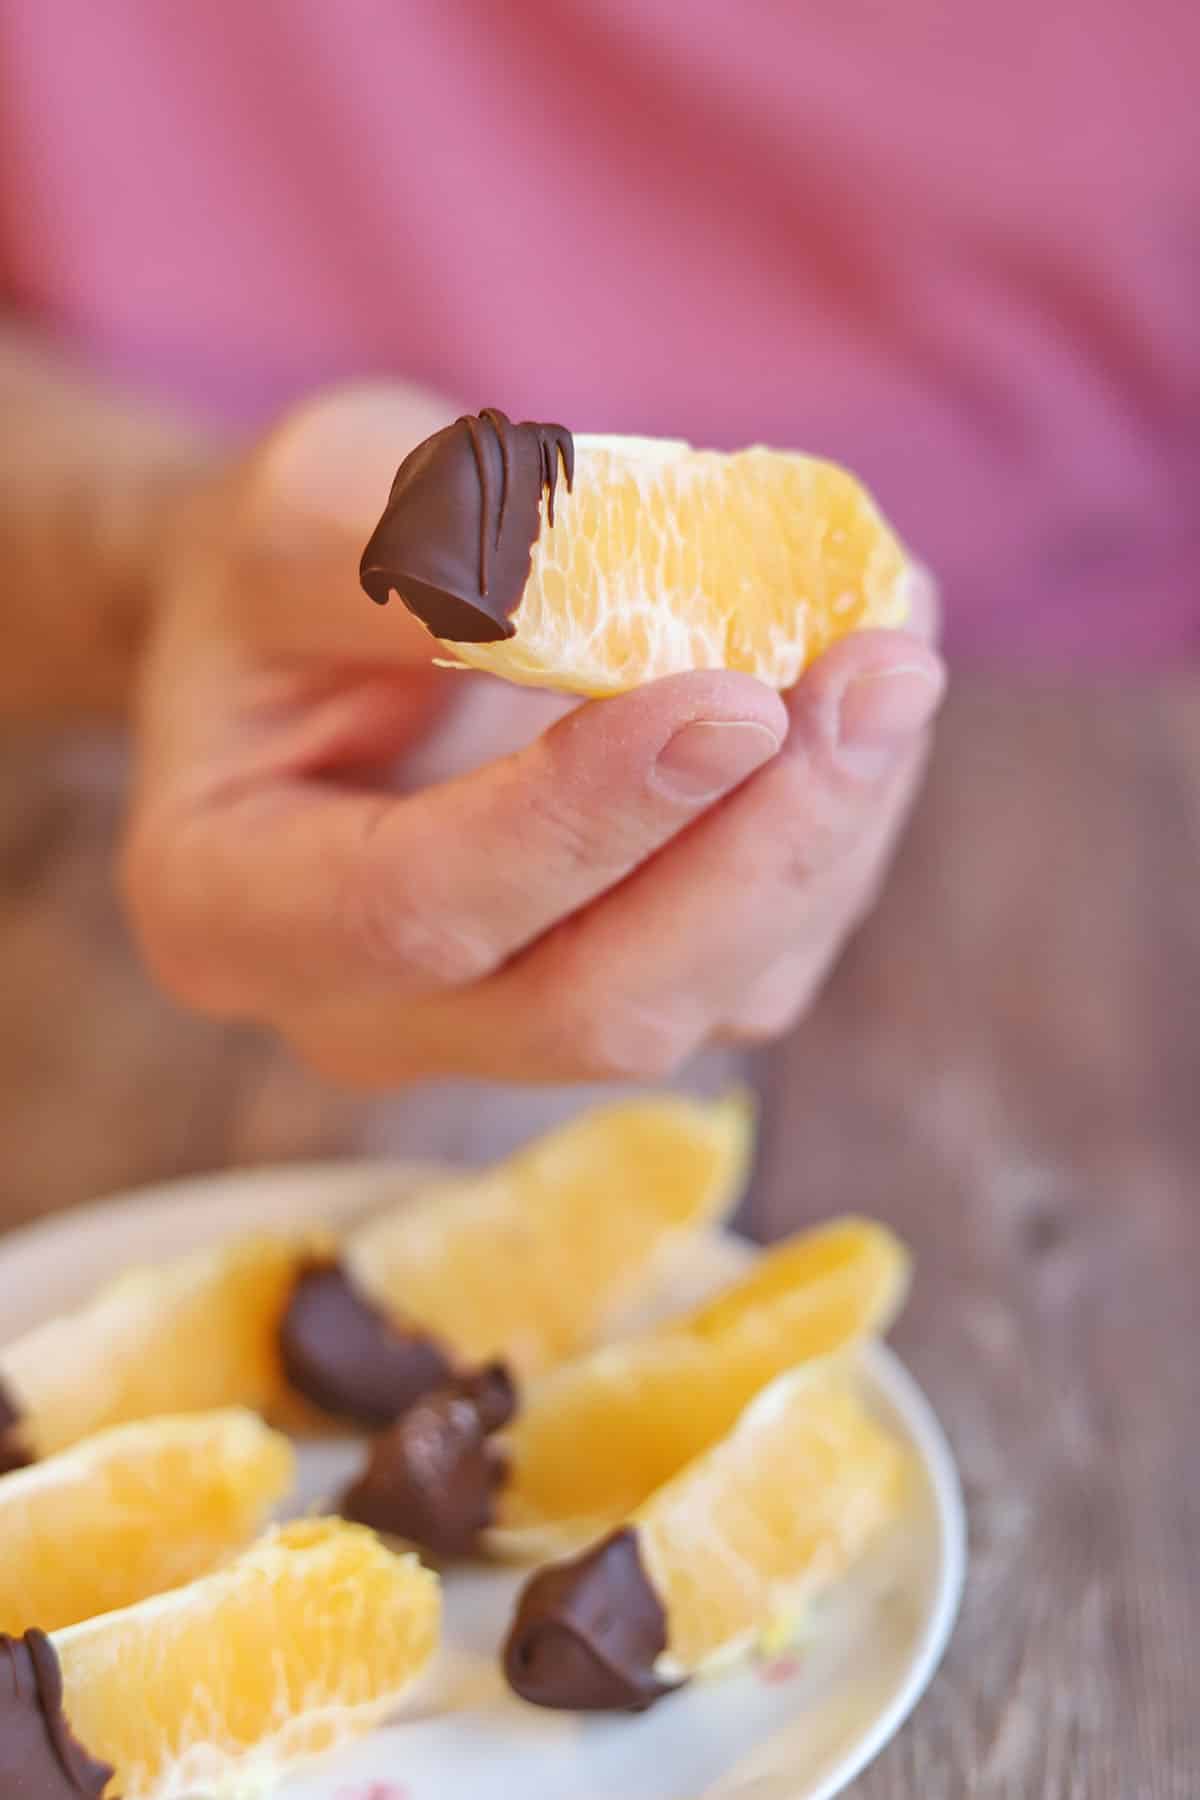 Hand holding a chocolate covered orange slice.